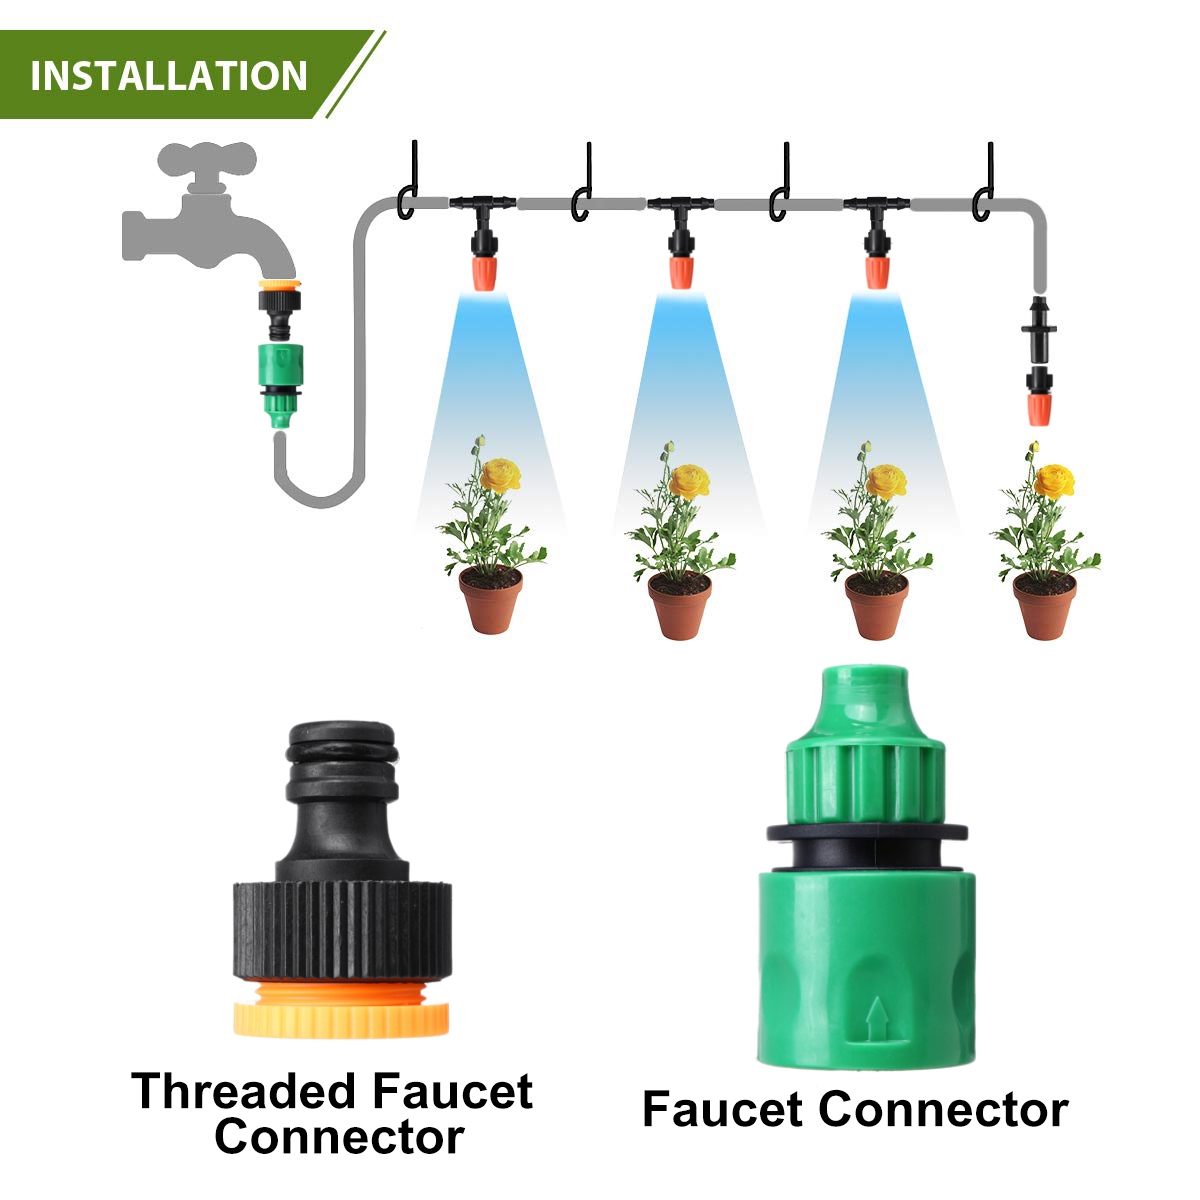 Adjustable Water Misting Cooling Irrigation System Kit Tubing Hose 5M/8M/10M/15M/20M/25M with Mist Nozzle Sprinkler